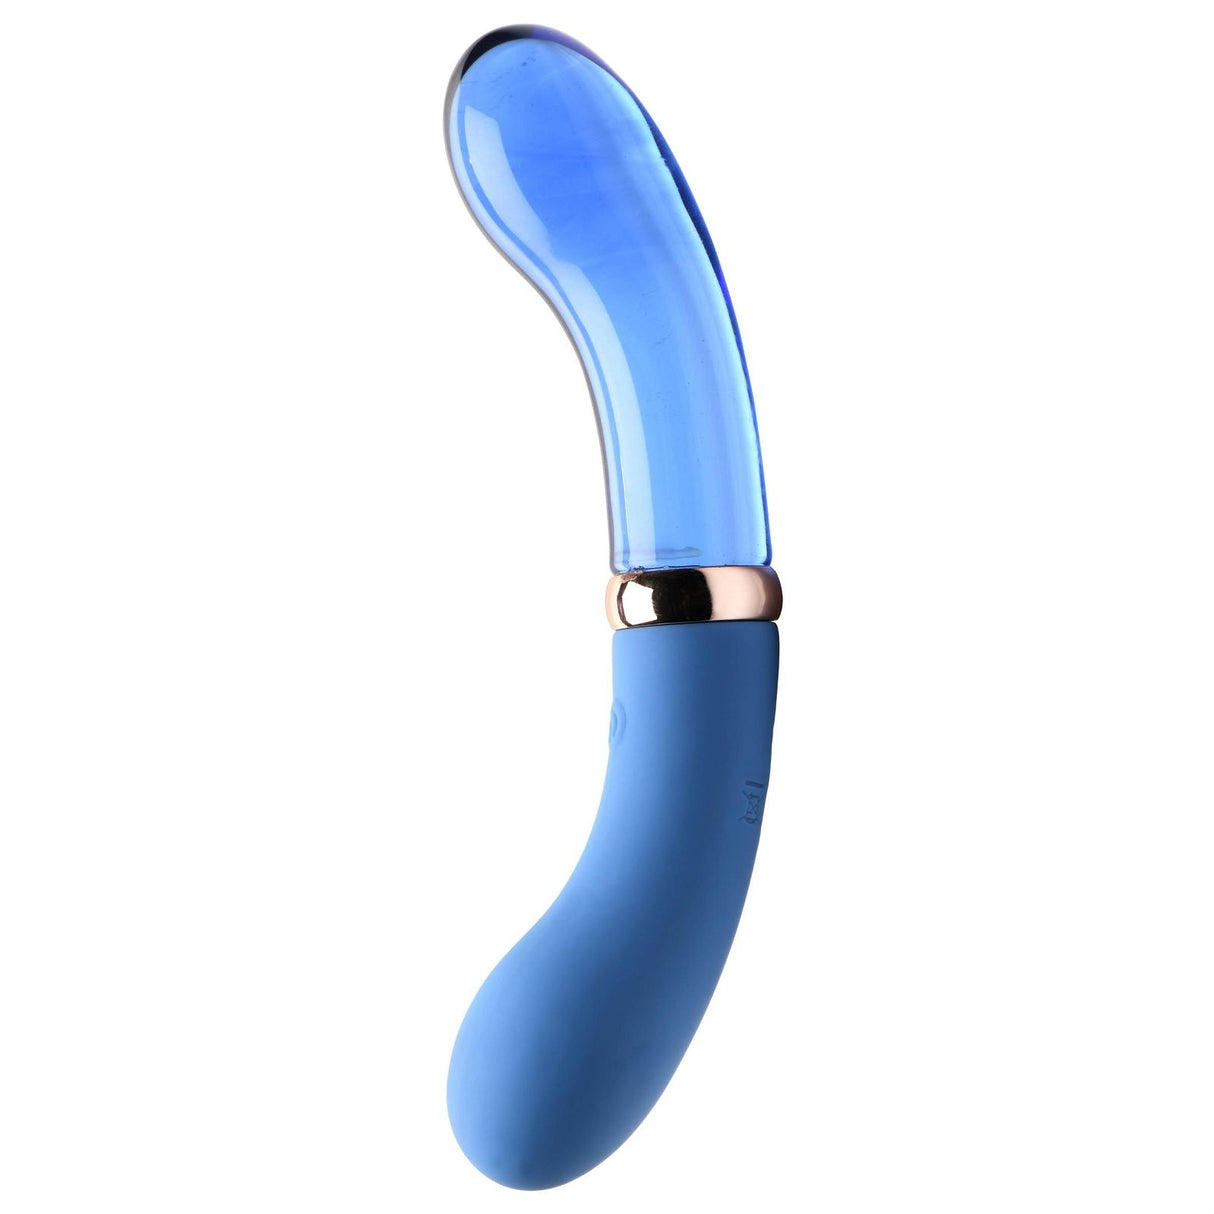 Prisms VibraGlass 10x Bleu Dual Ended G-spot Silicone & Glass Vibrator - AdultLuxe